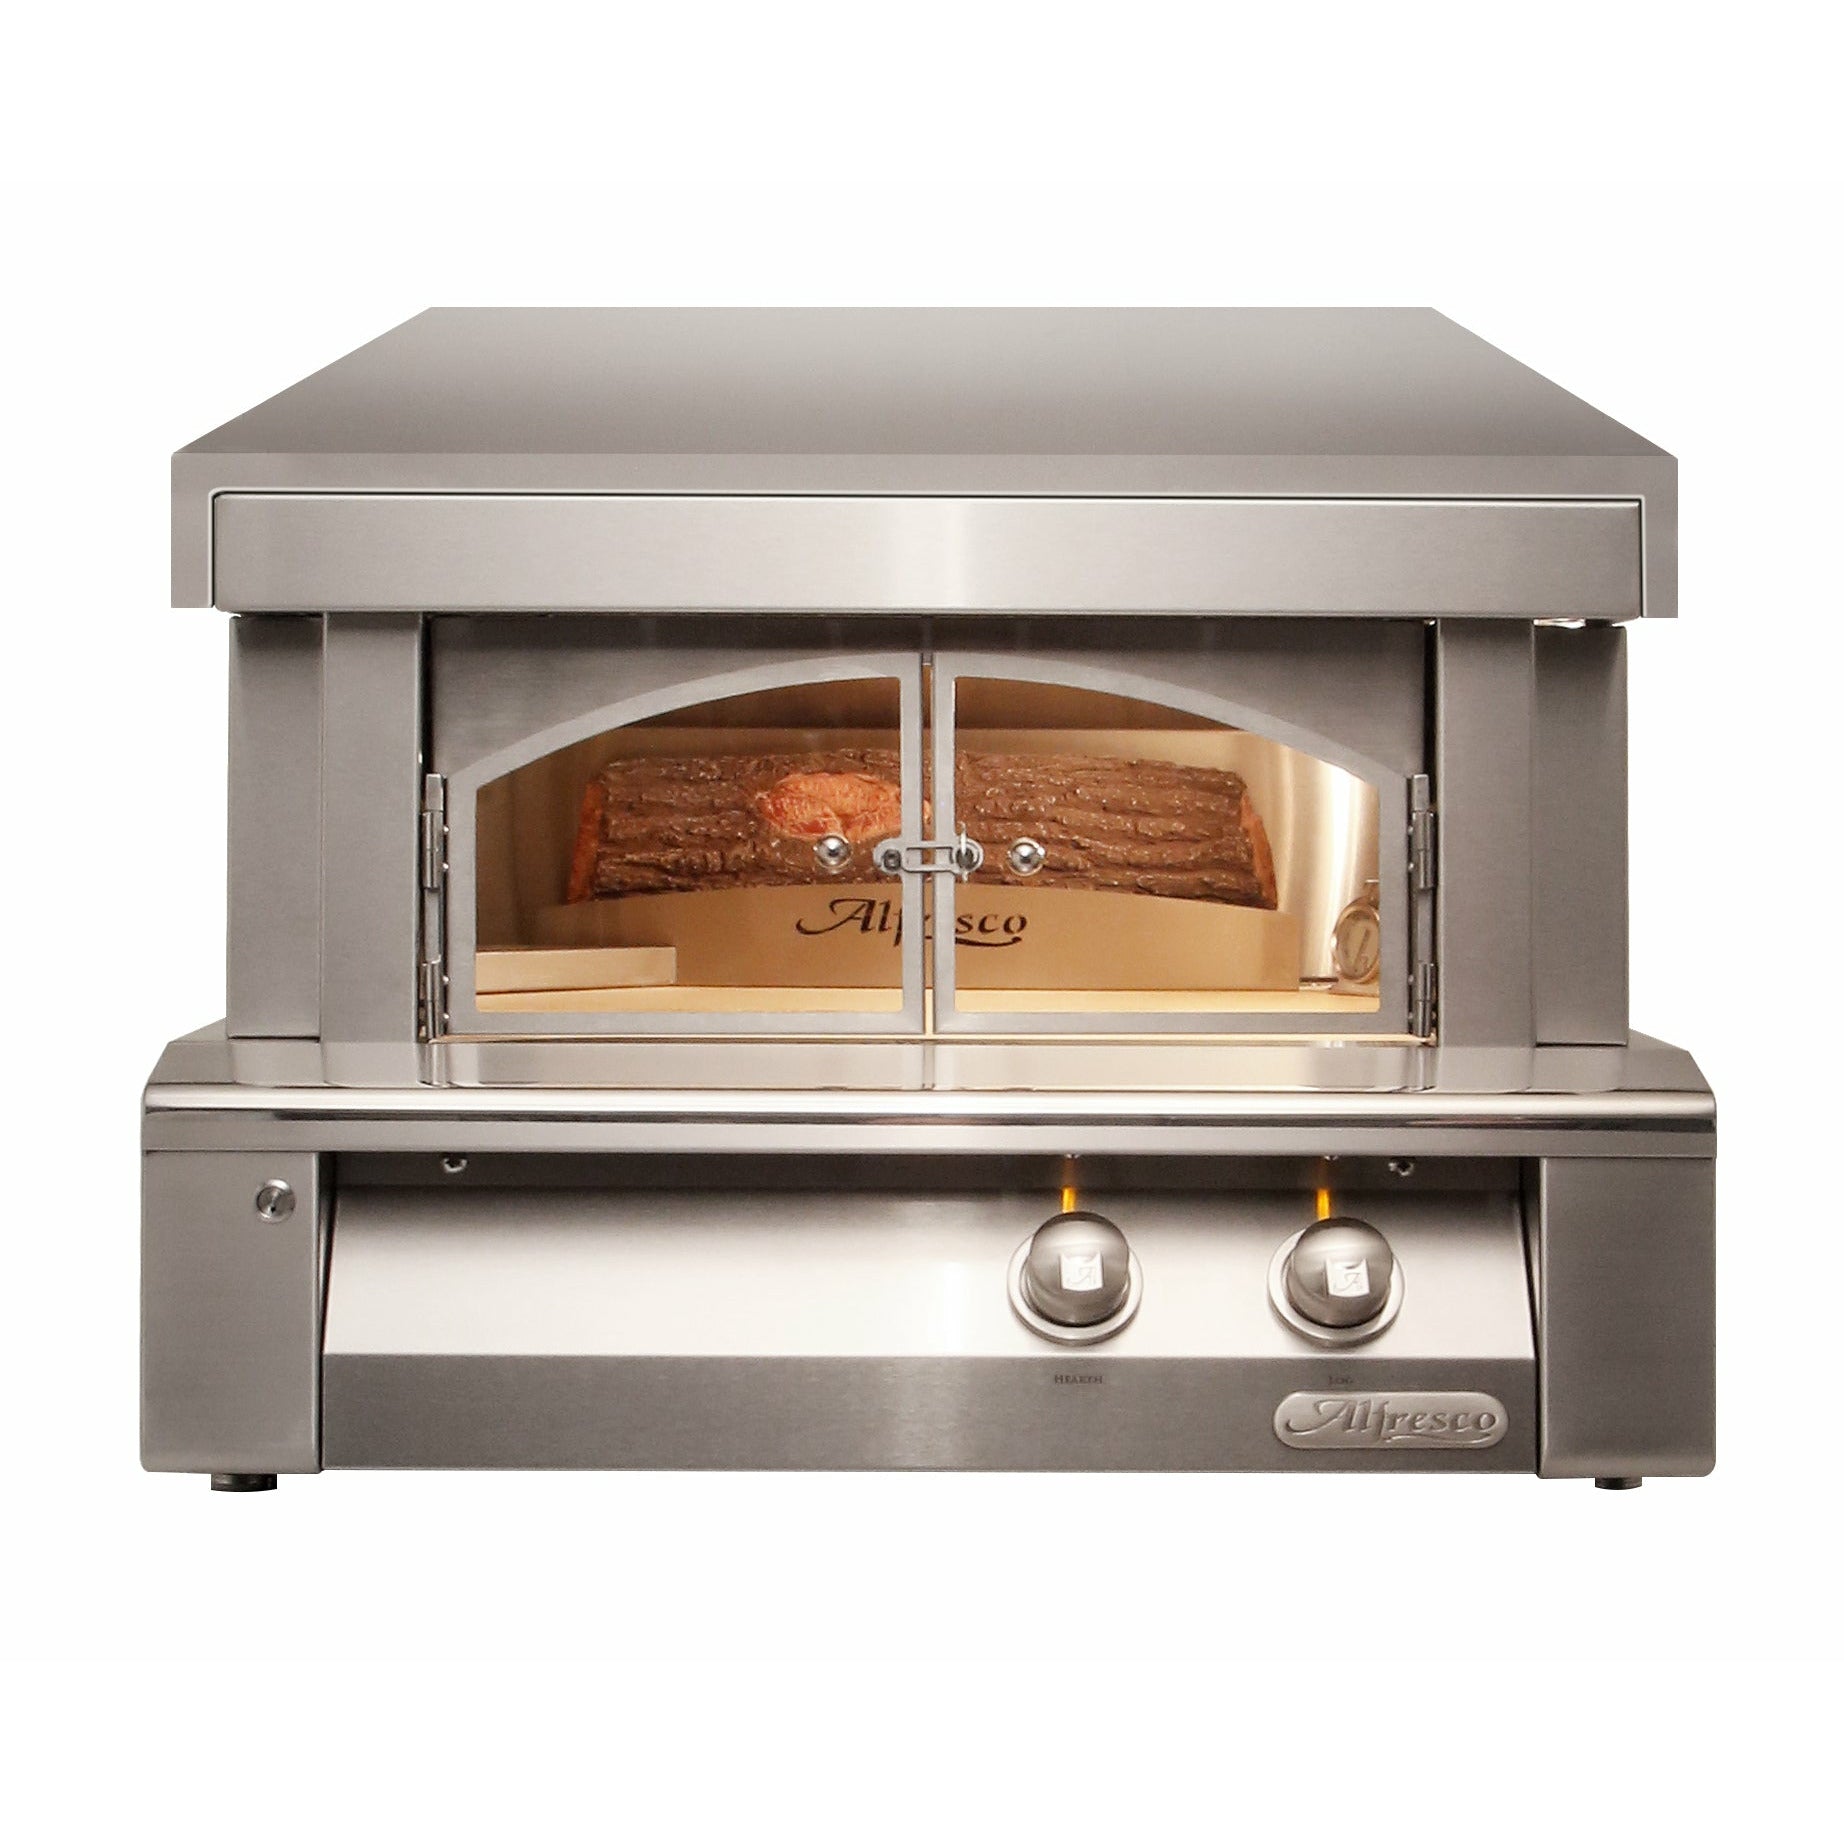 Alfresco Pizza Oven Plus Countertop Model